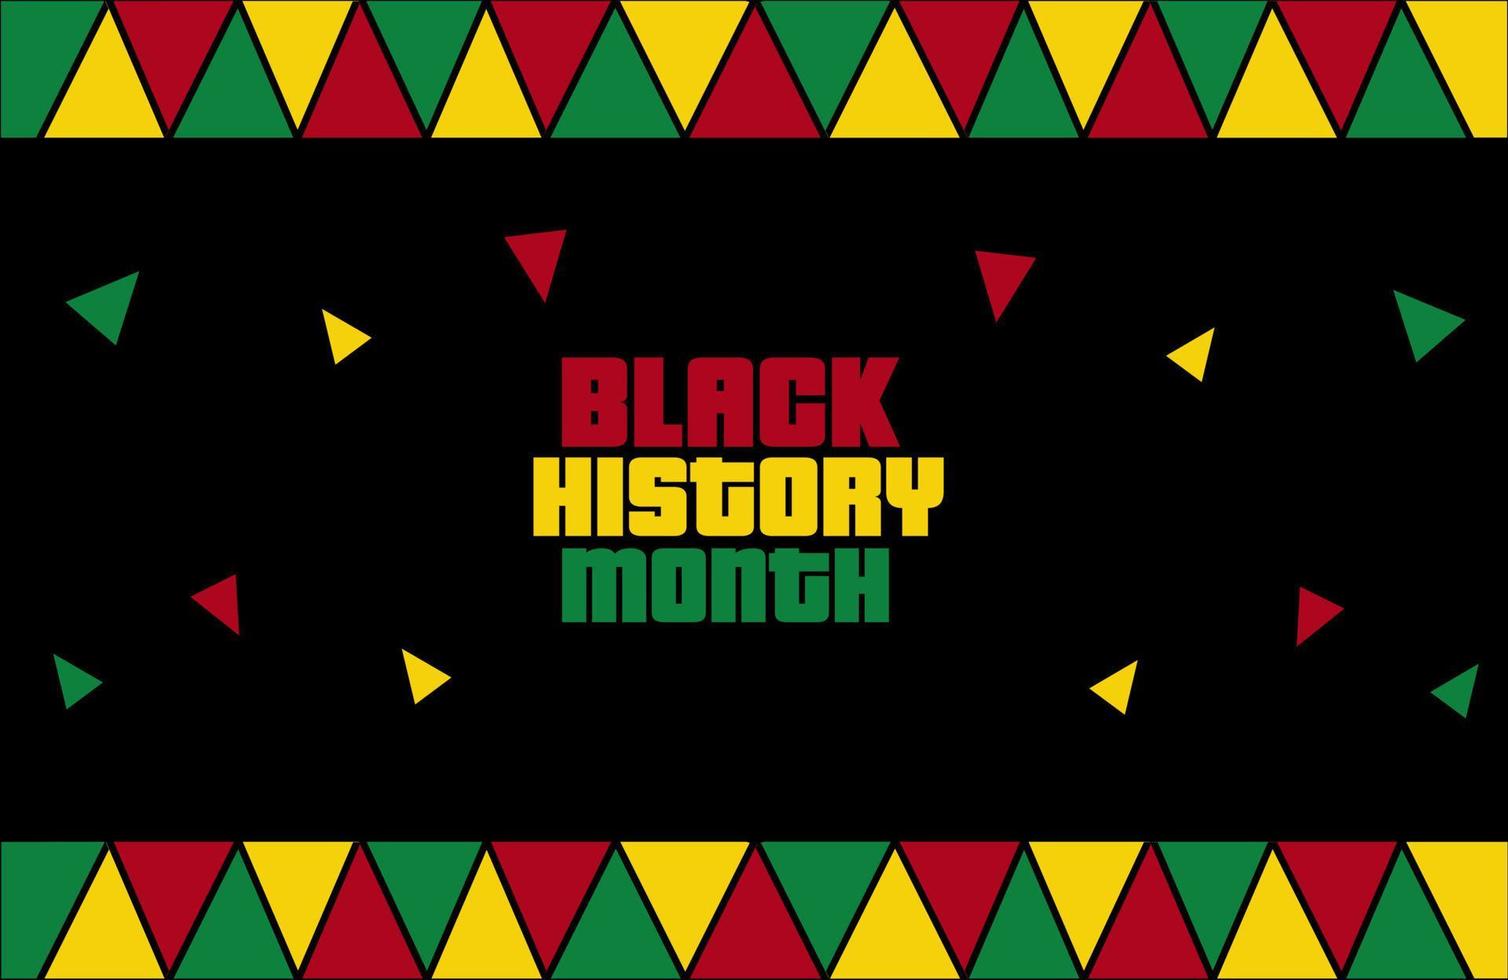 Black history month background banner vector